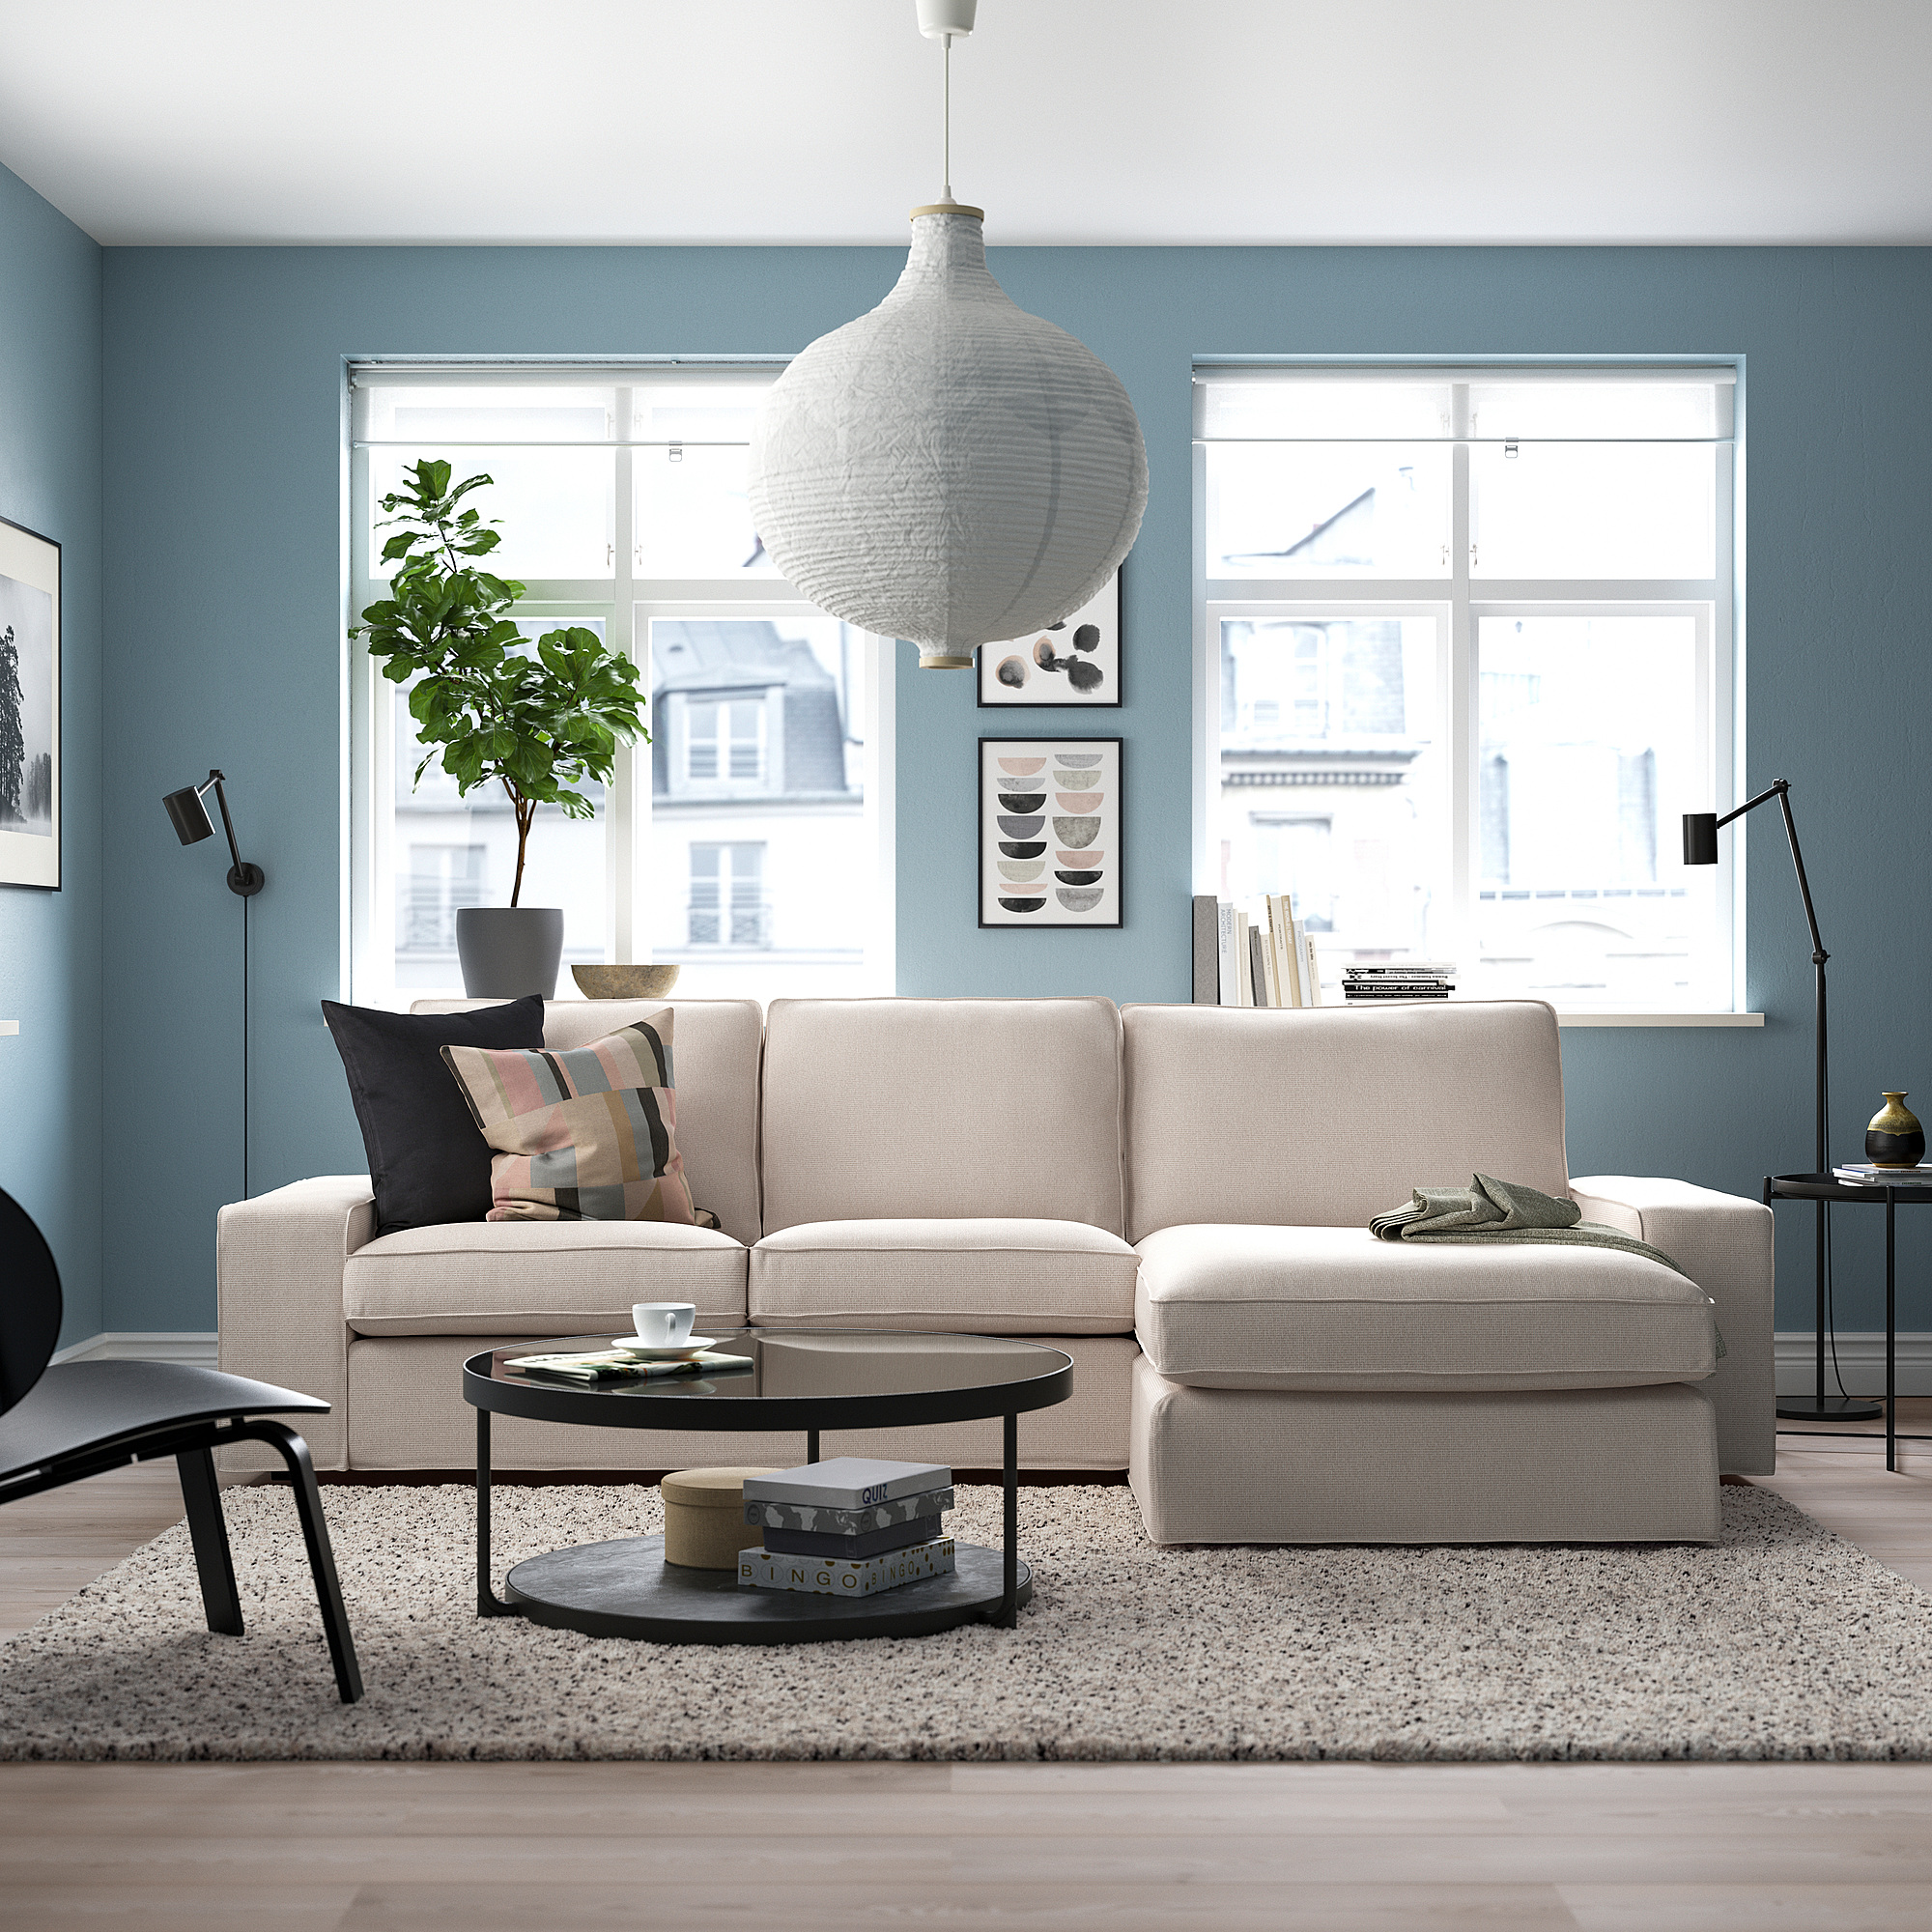 KIVIK 3-seat sofa with chaise longue, Tresund light beige | IKEA Indonesia